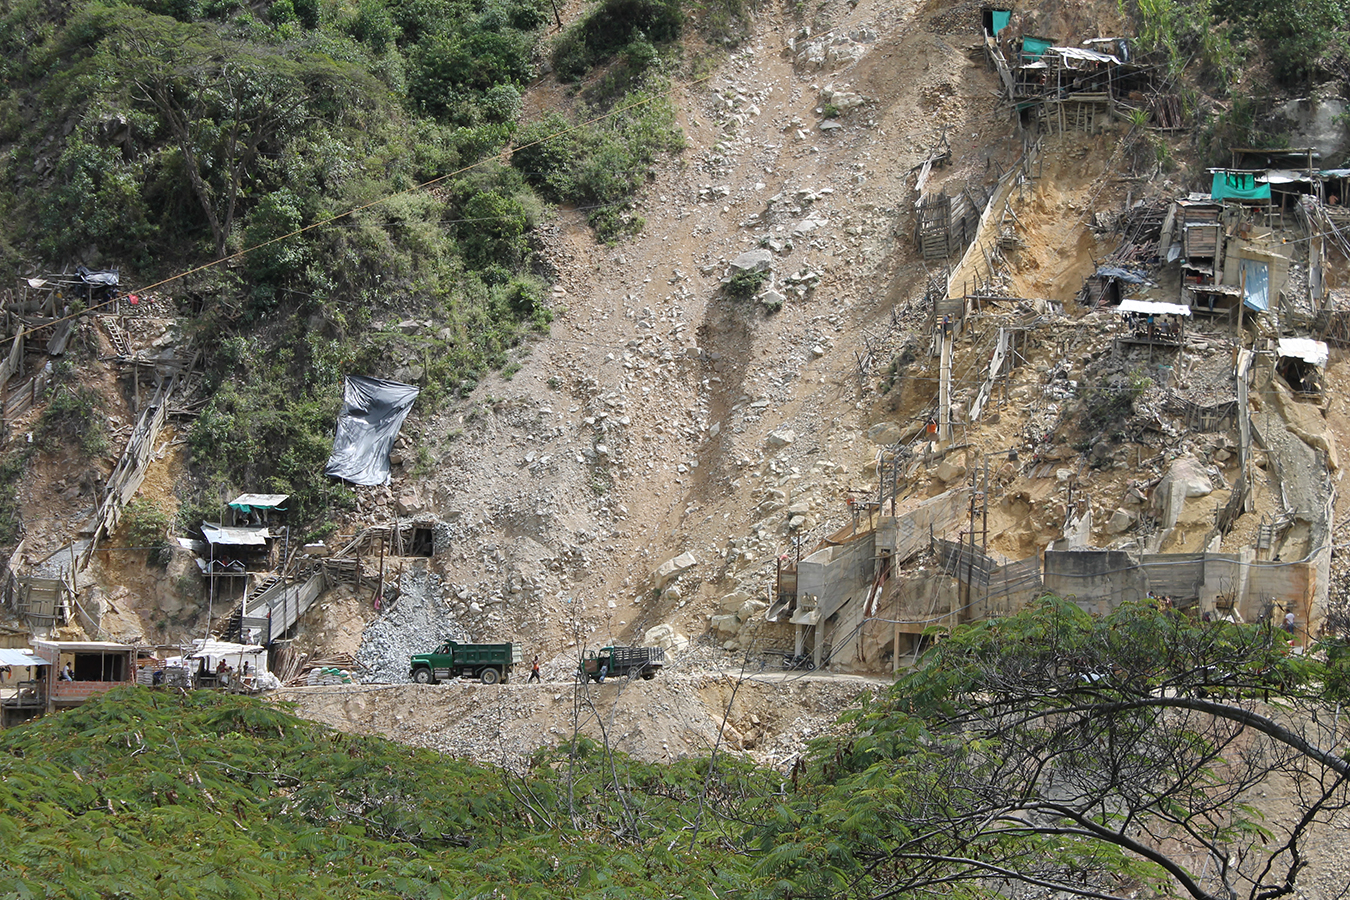 Mining debris on the slope. Photo by Pablo Jaramillo.